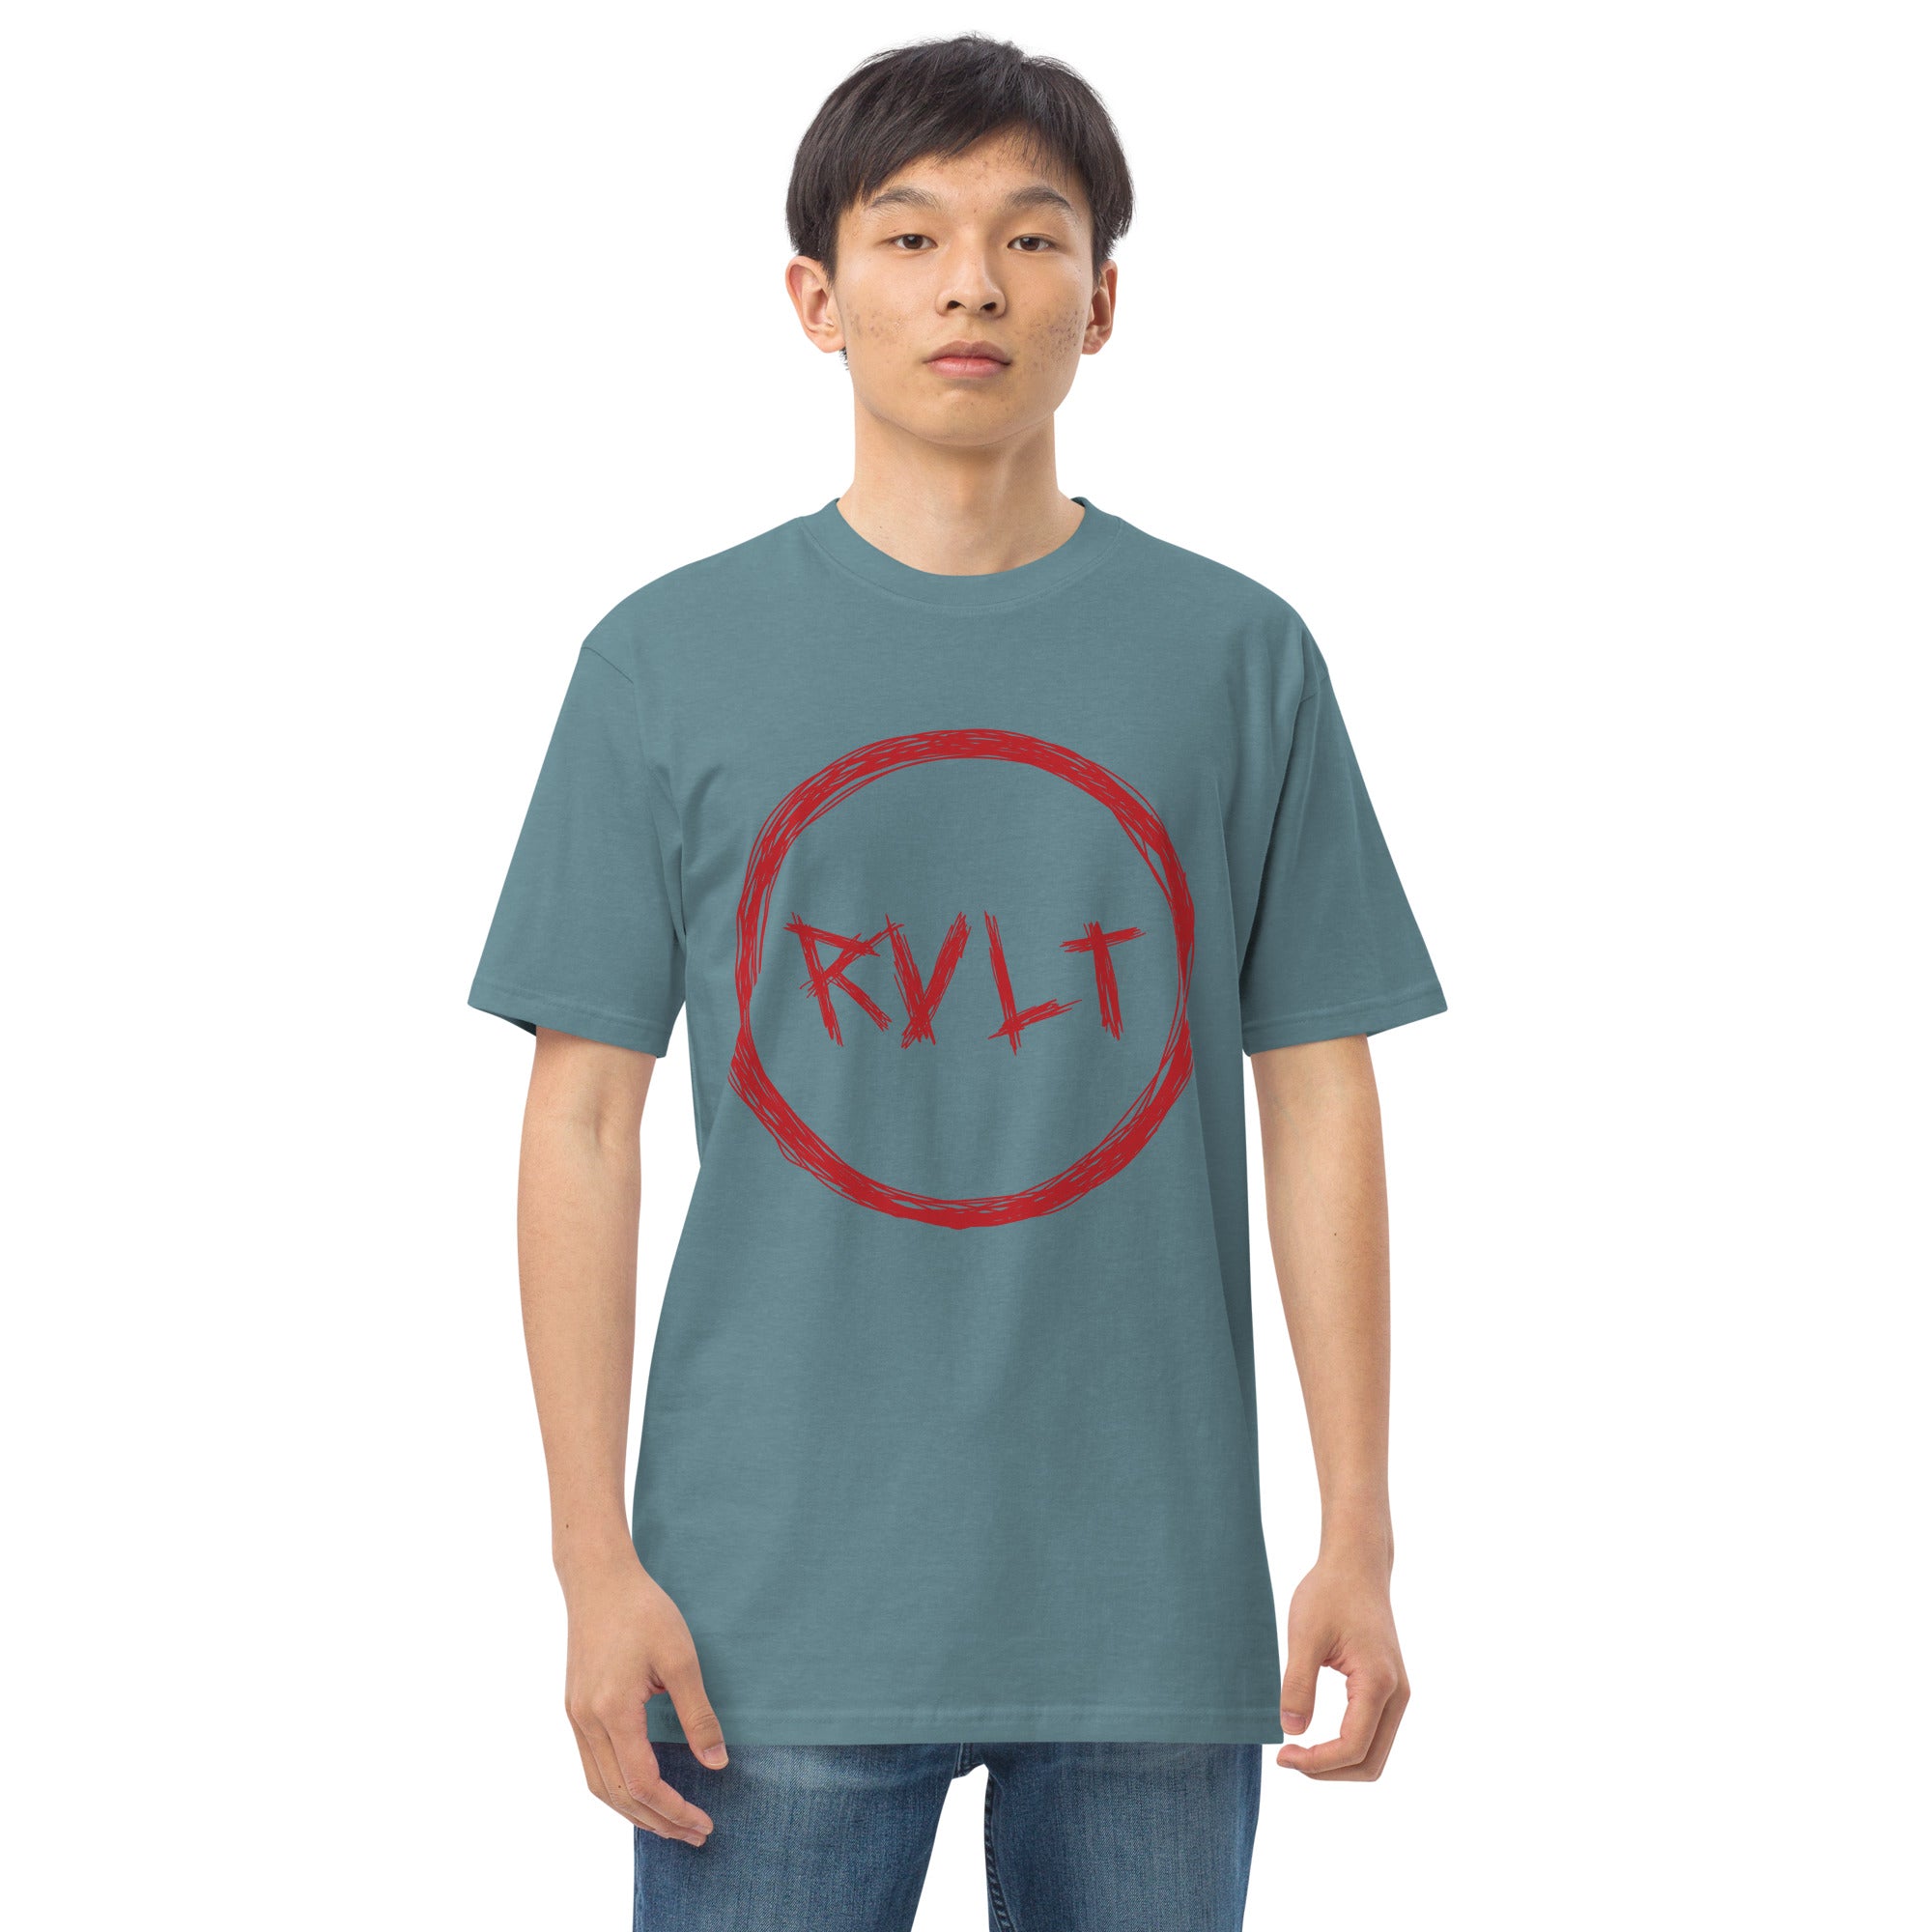 RVLT Men's Tshirt - NFTees365